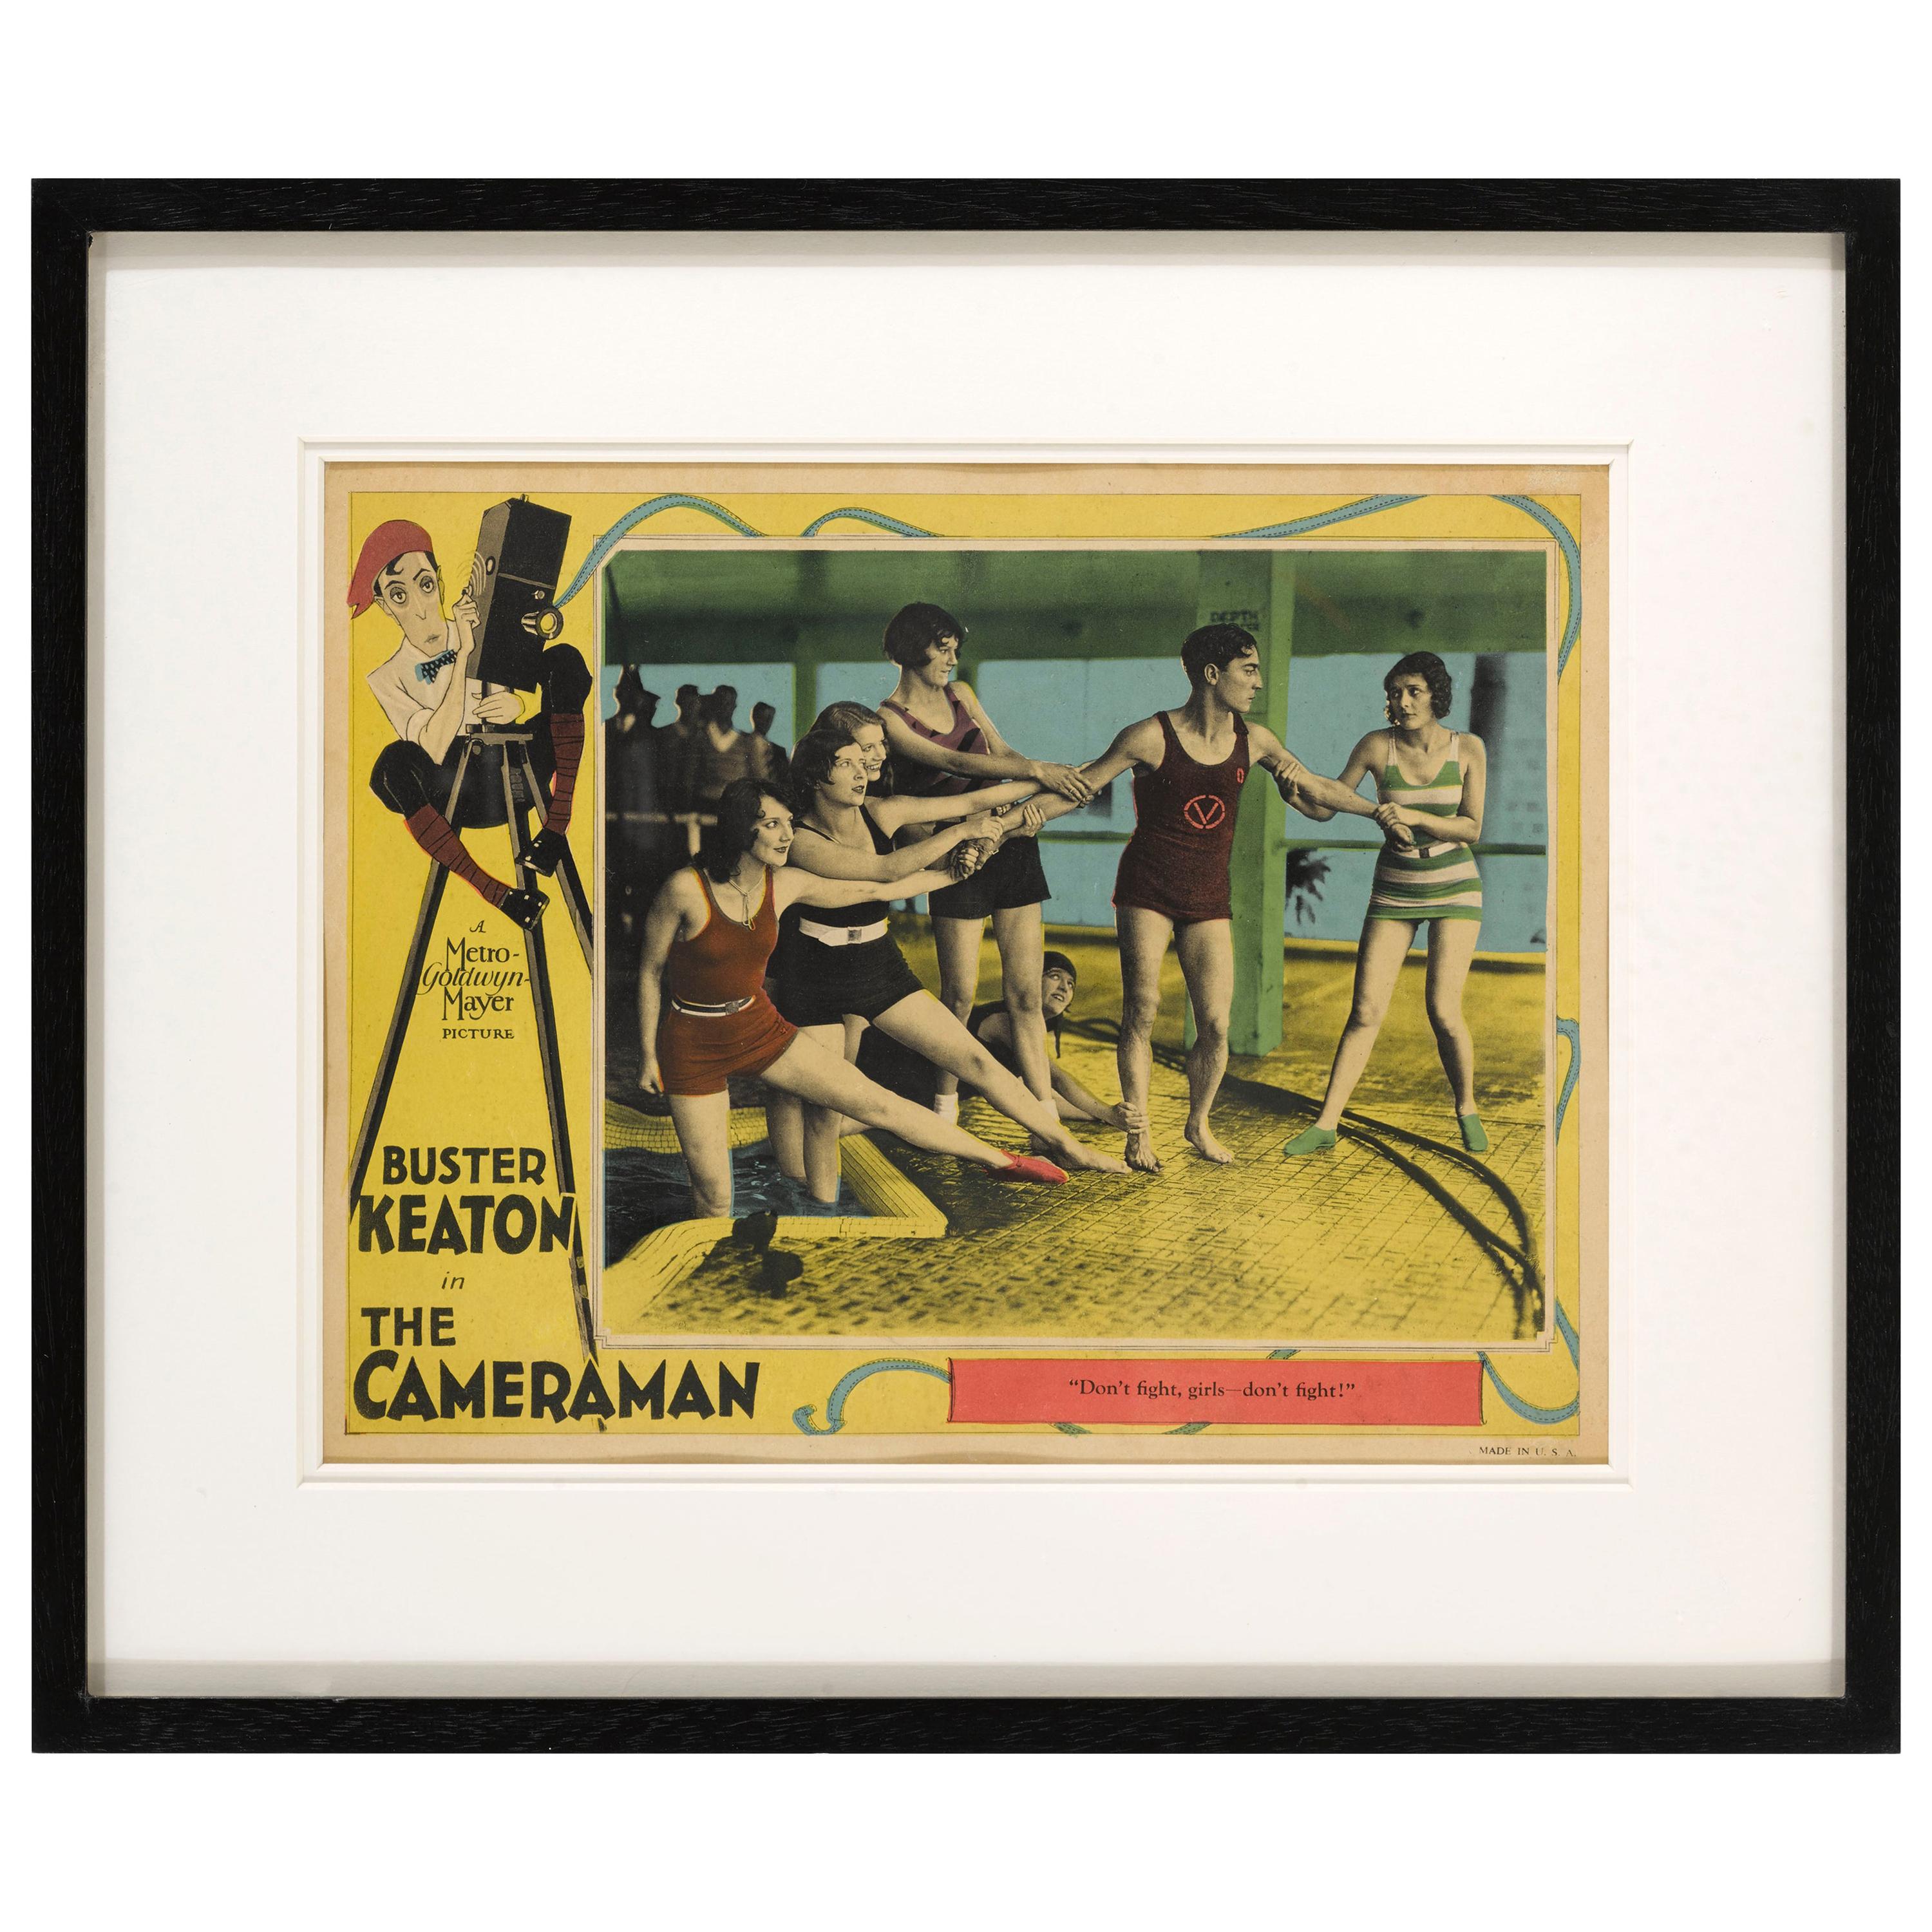 The Cameraman" Original US Lobby Card